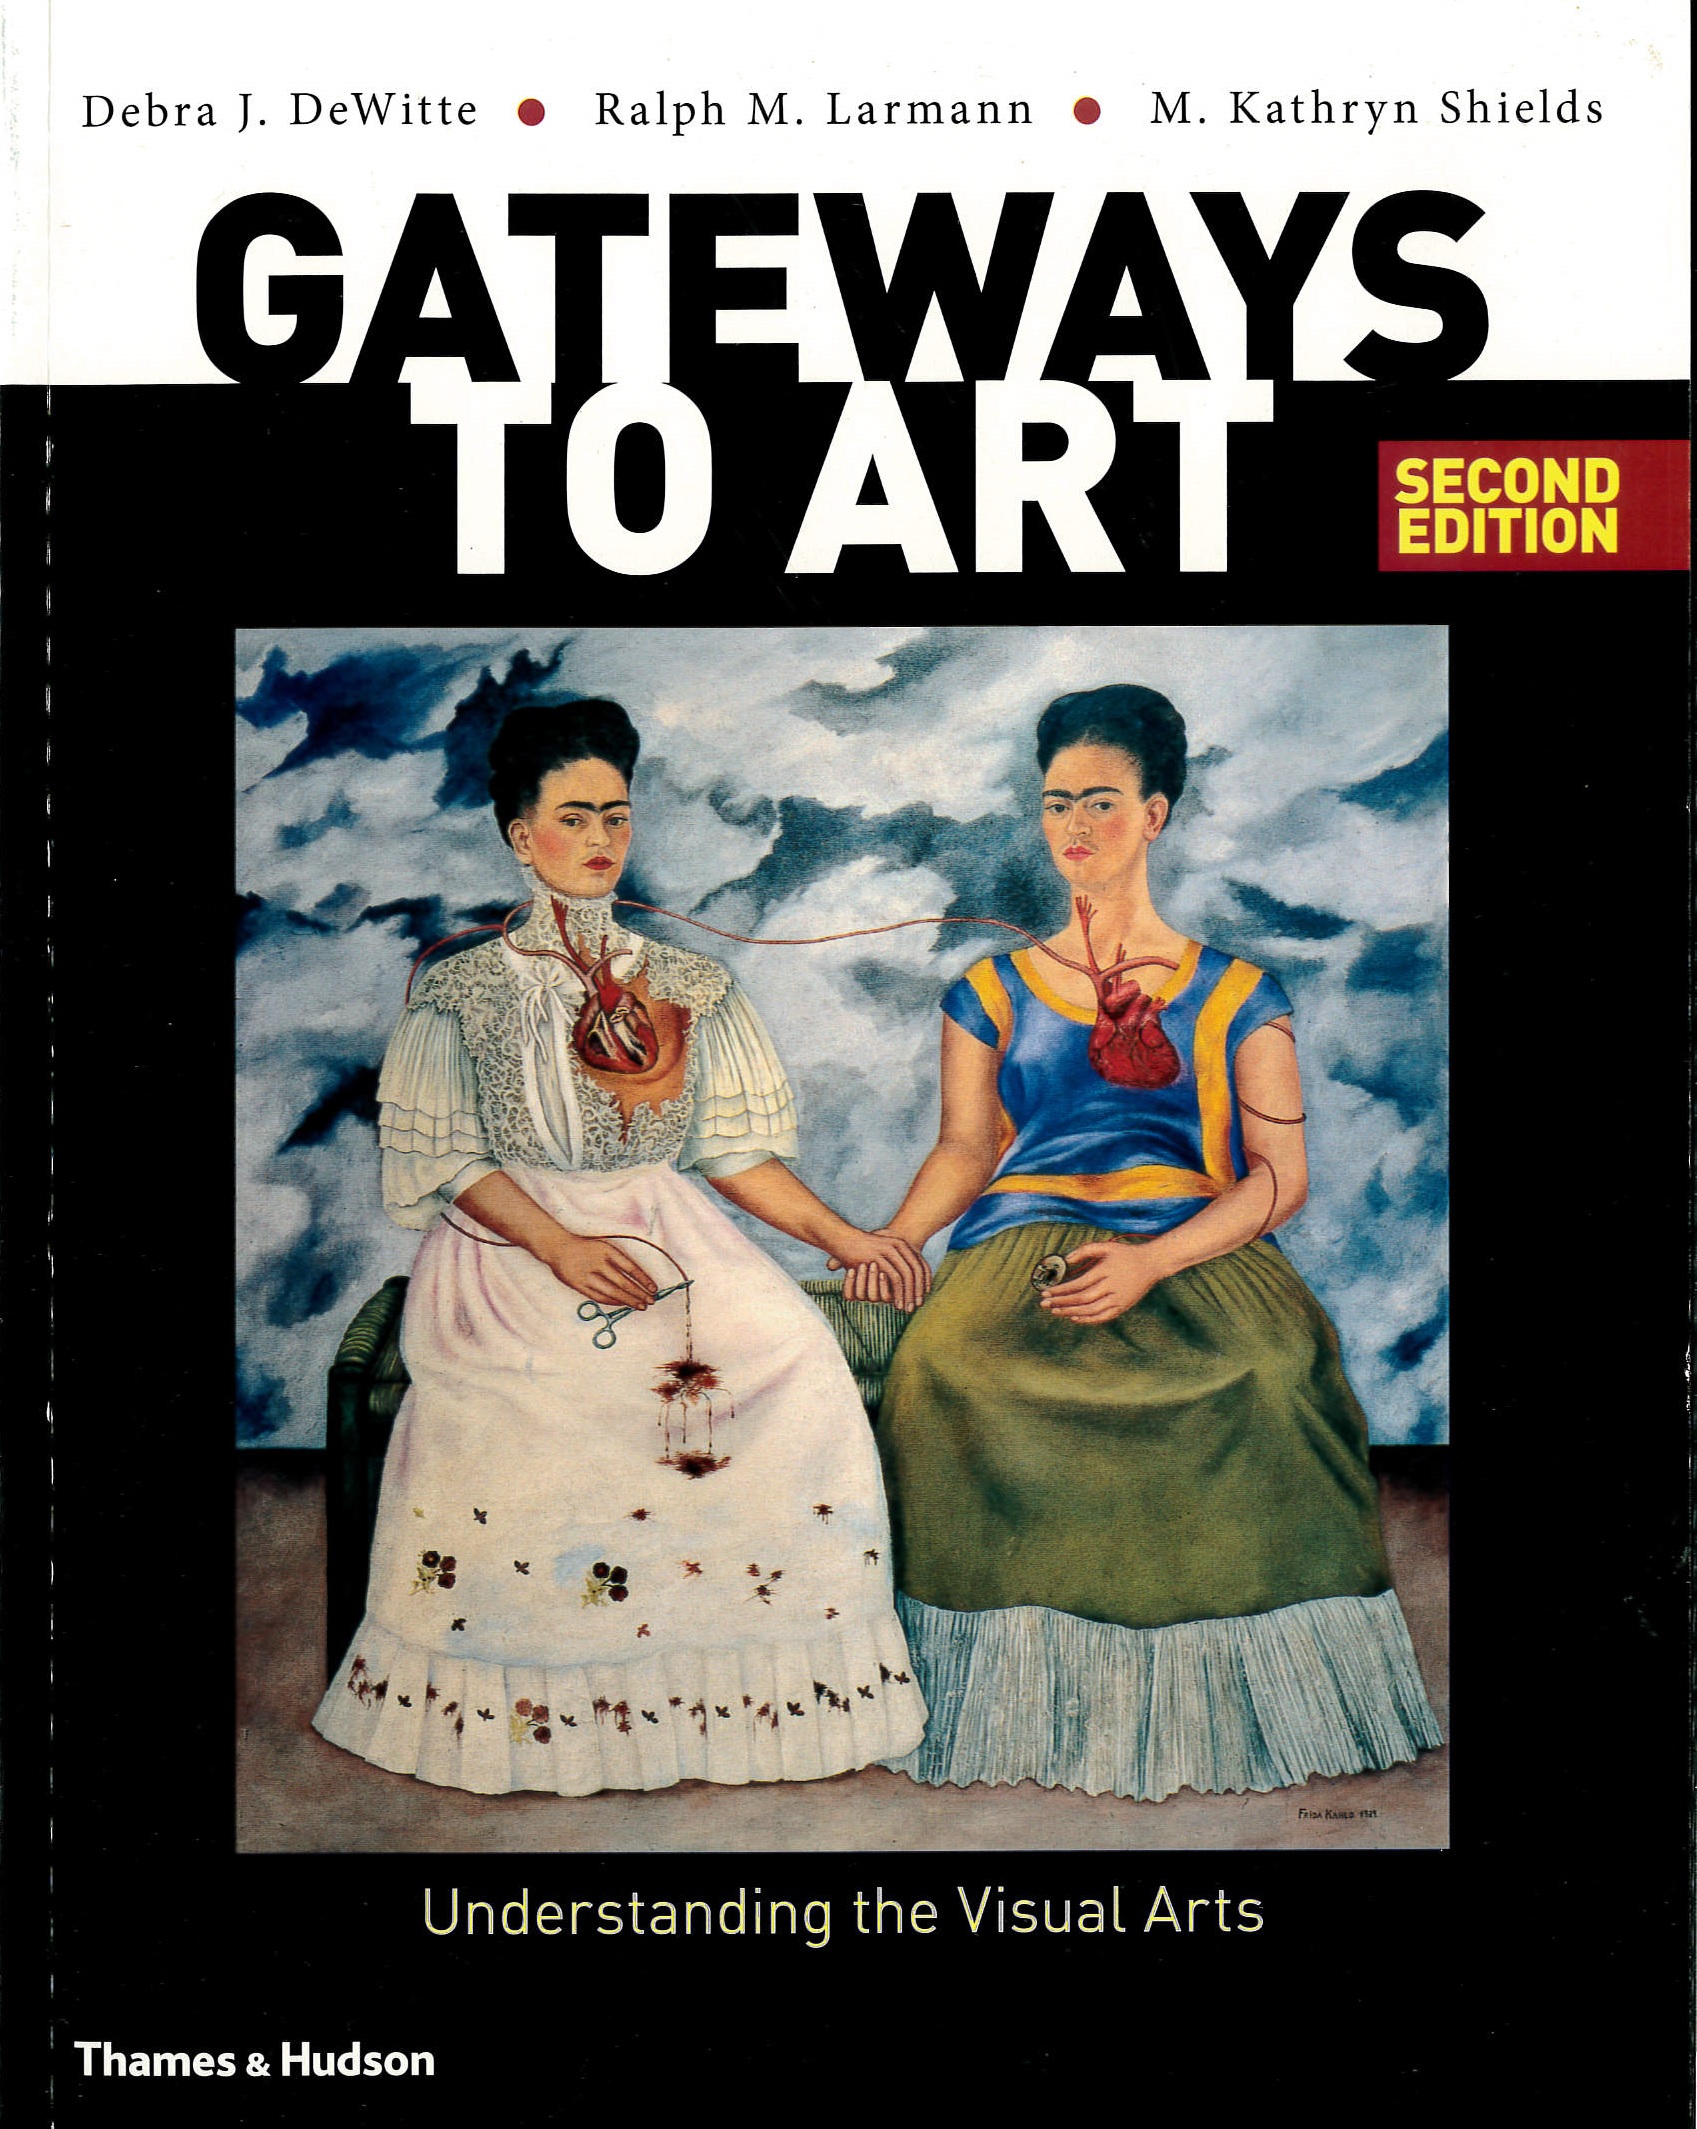 Gateways to art : understanding the visual arts